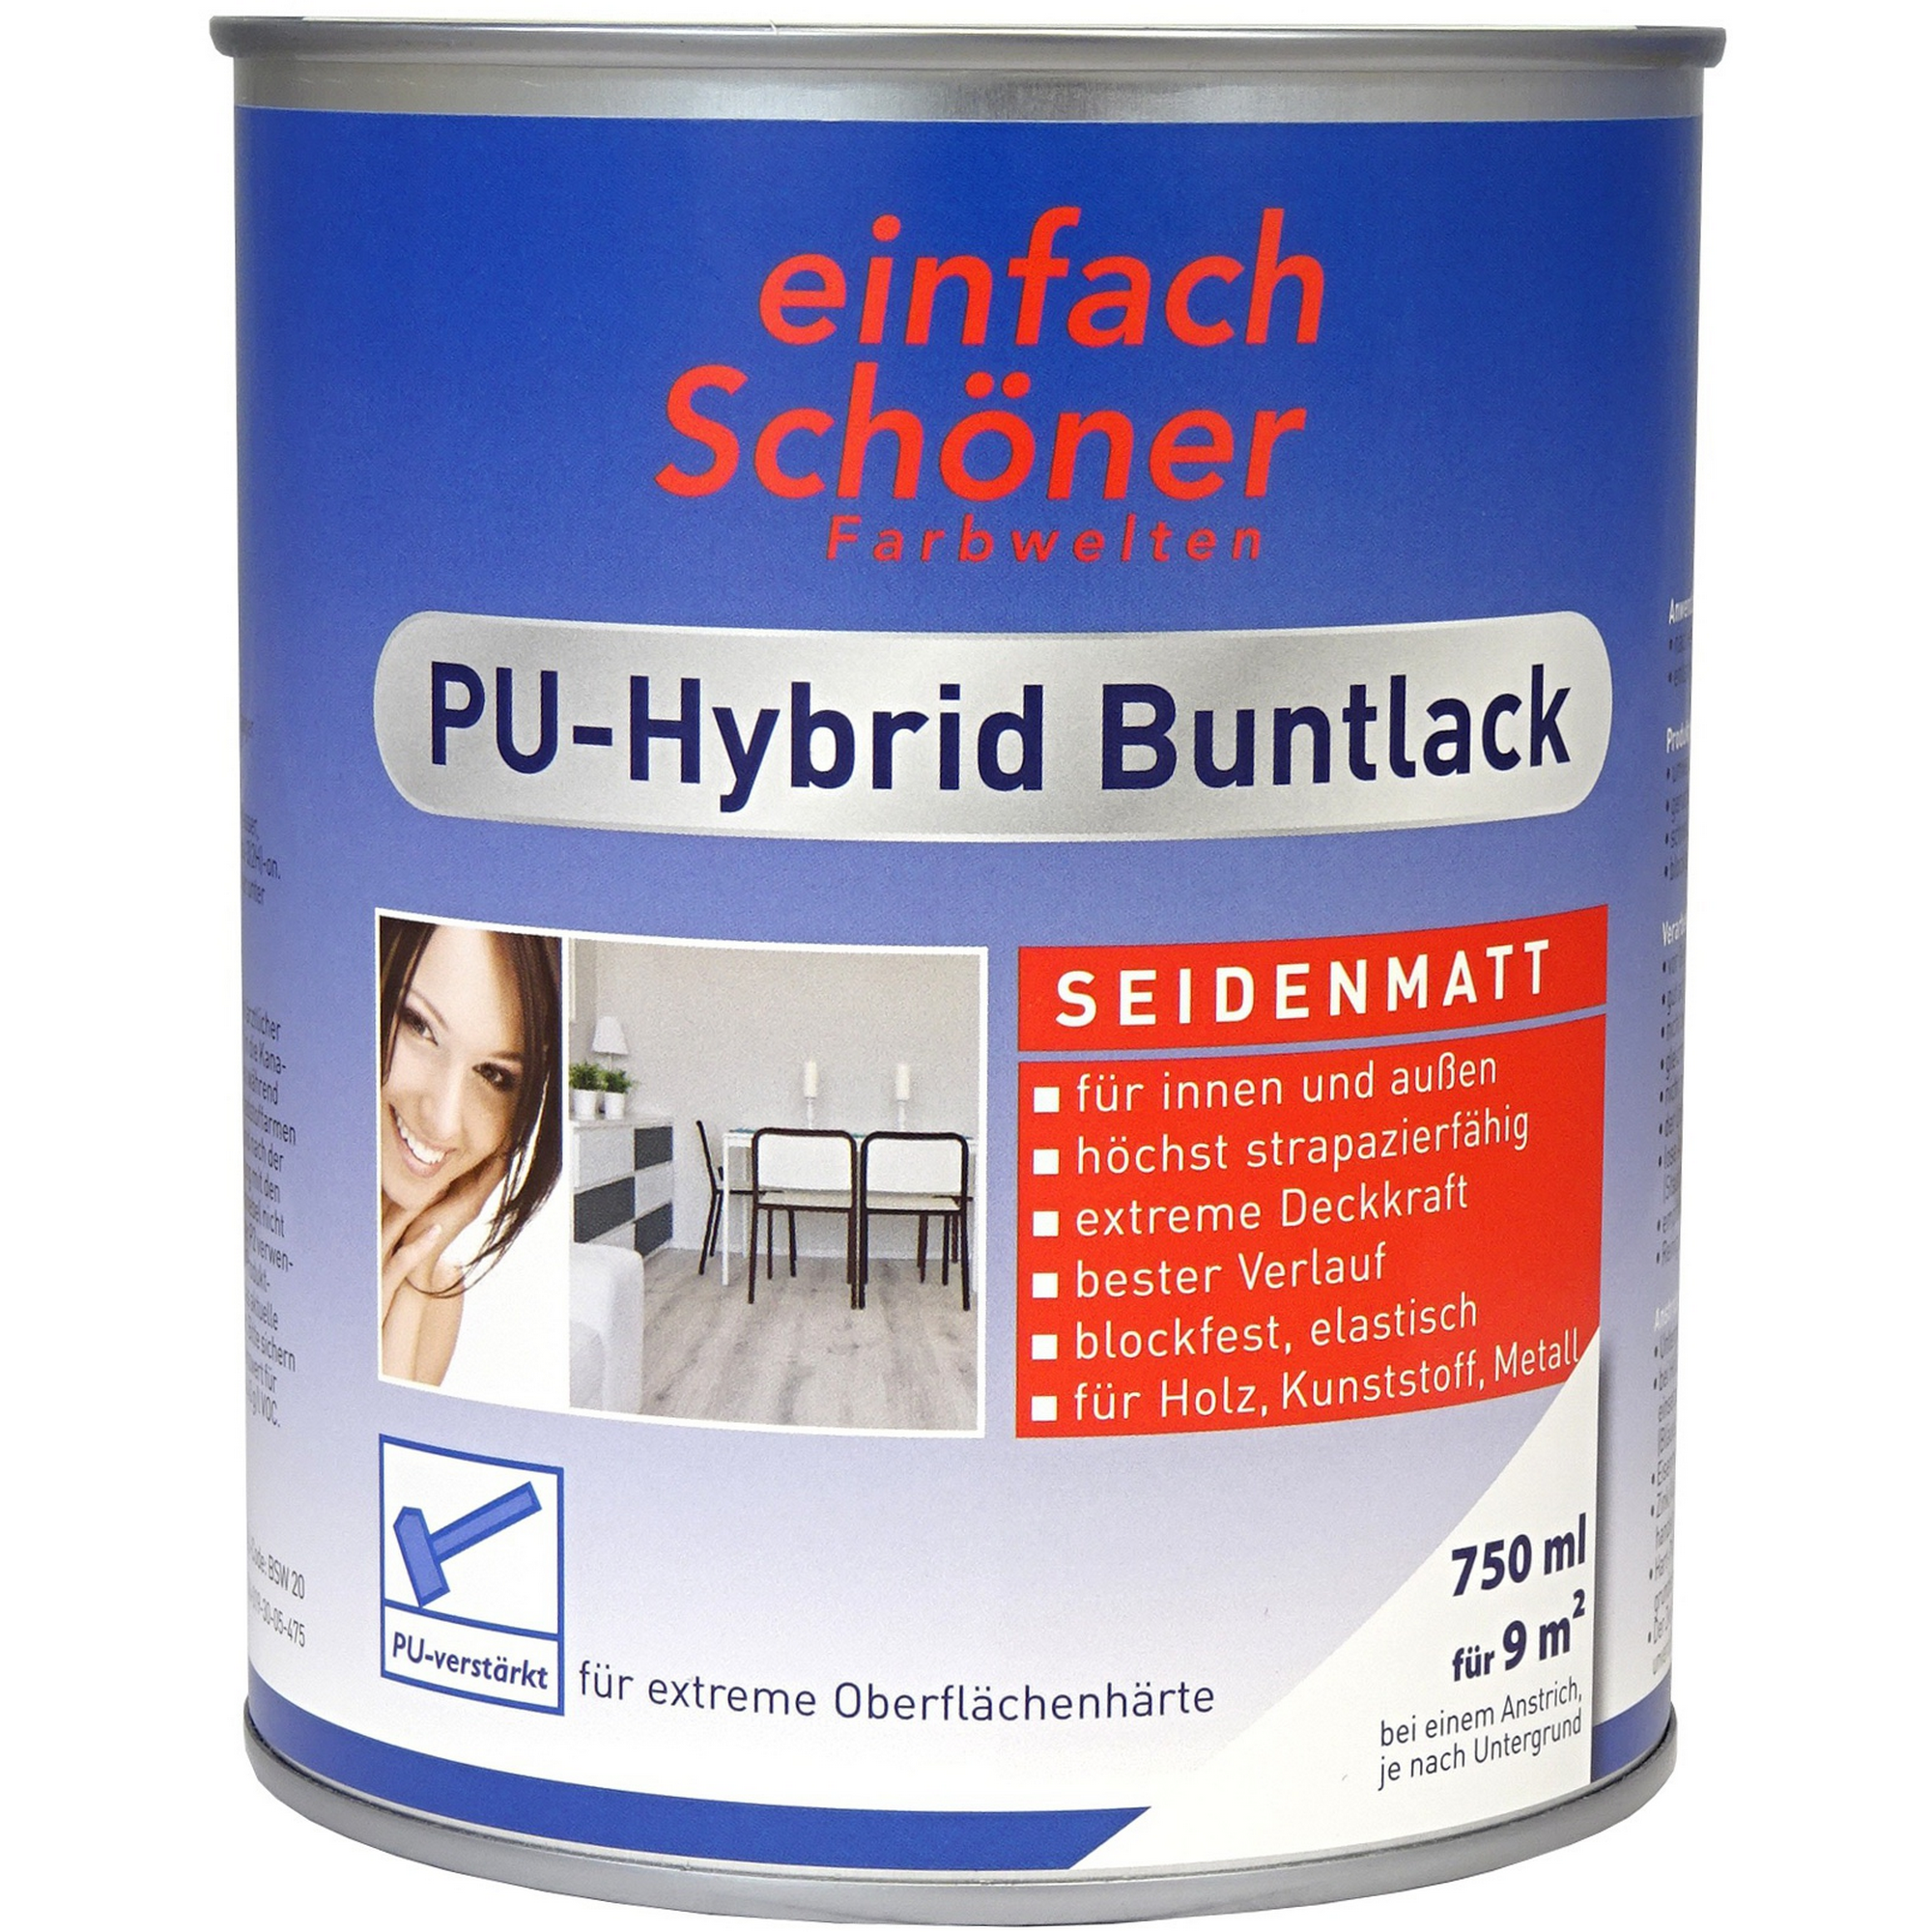 PU-Hybrid Buntlack tiefschwarz seidenmatt 750 ml + product picture